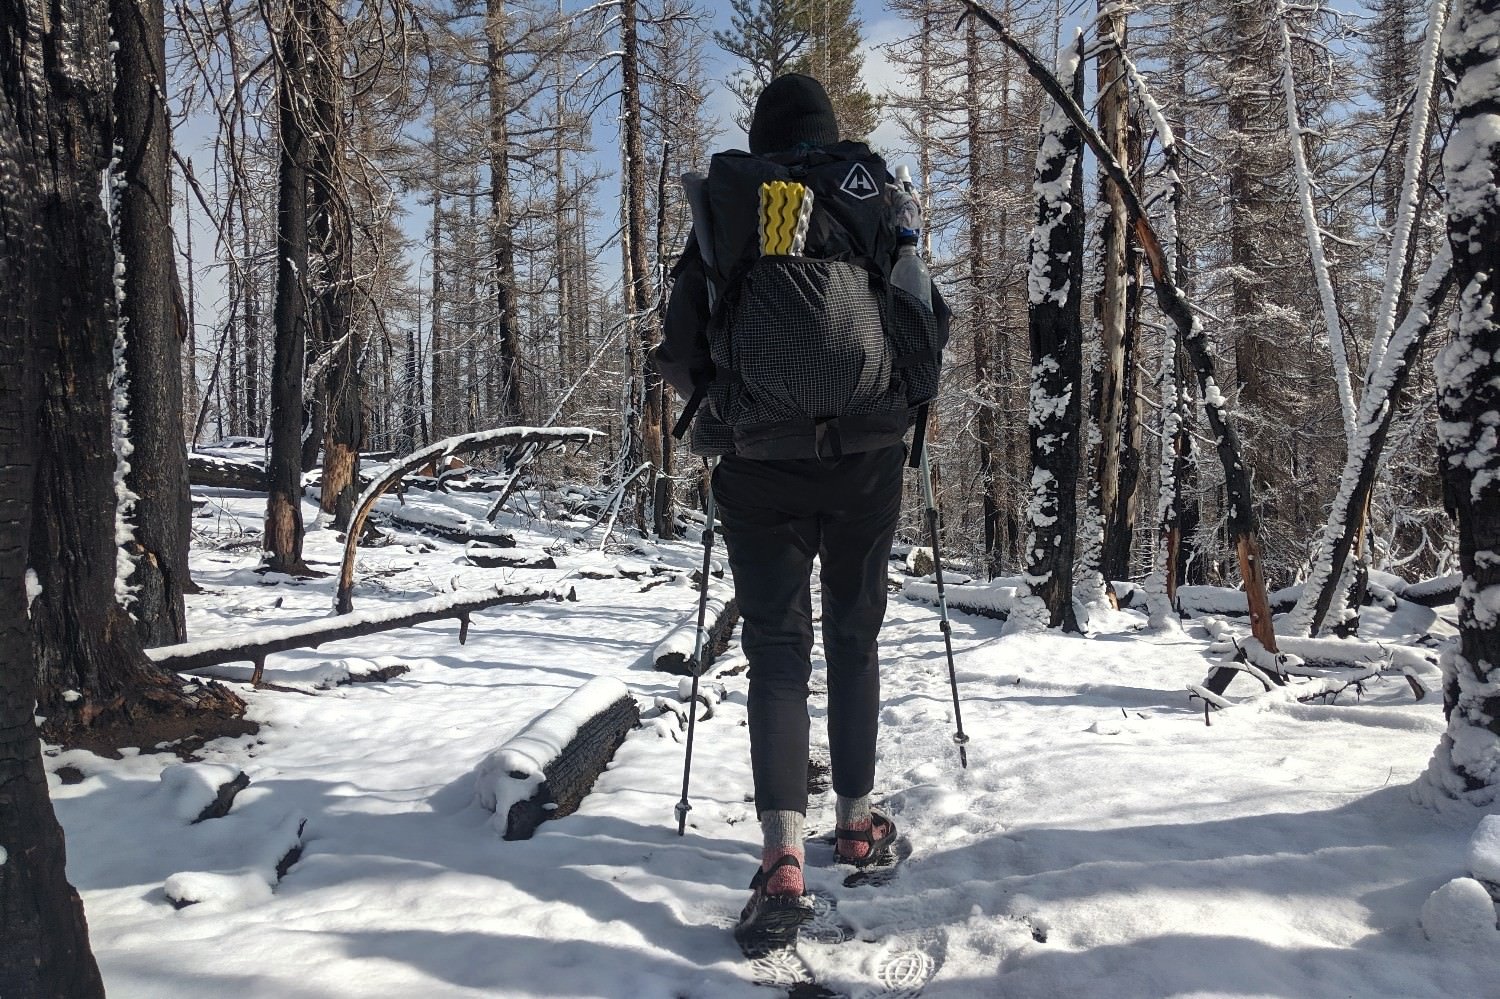 A hiker hiking on a snowy trail with the Black Diamond Trail Ergo Cork trekking poles